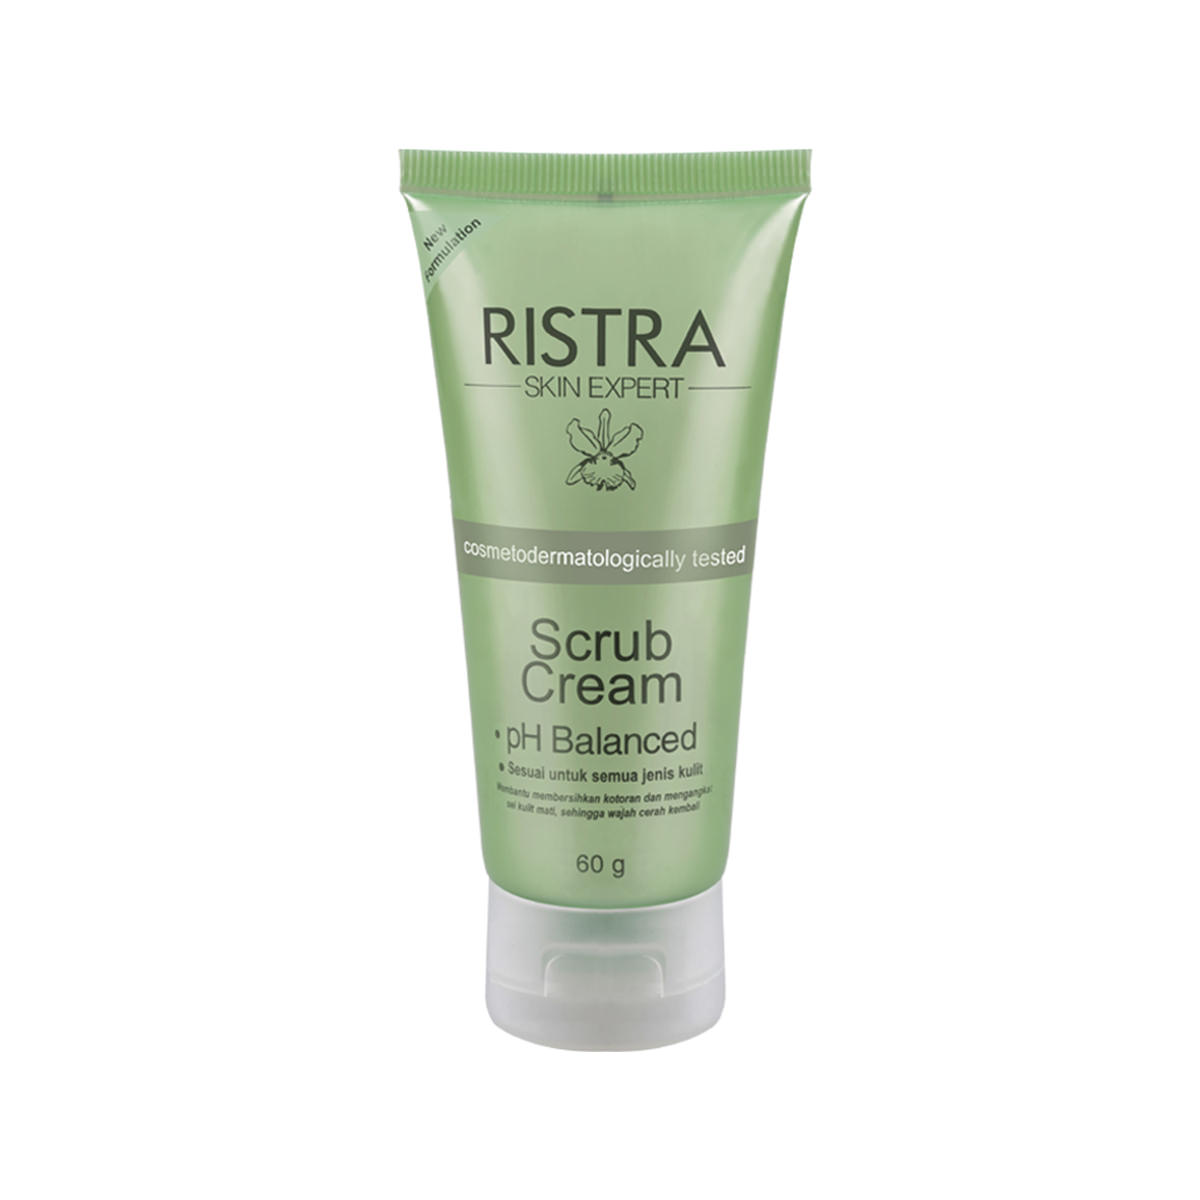 RISTRA-Scrub-Cream-60g_sfw-(1)